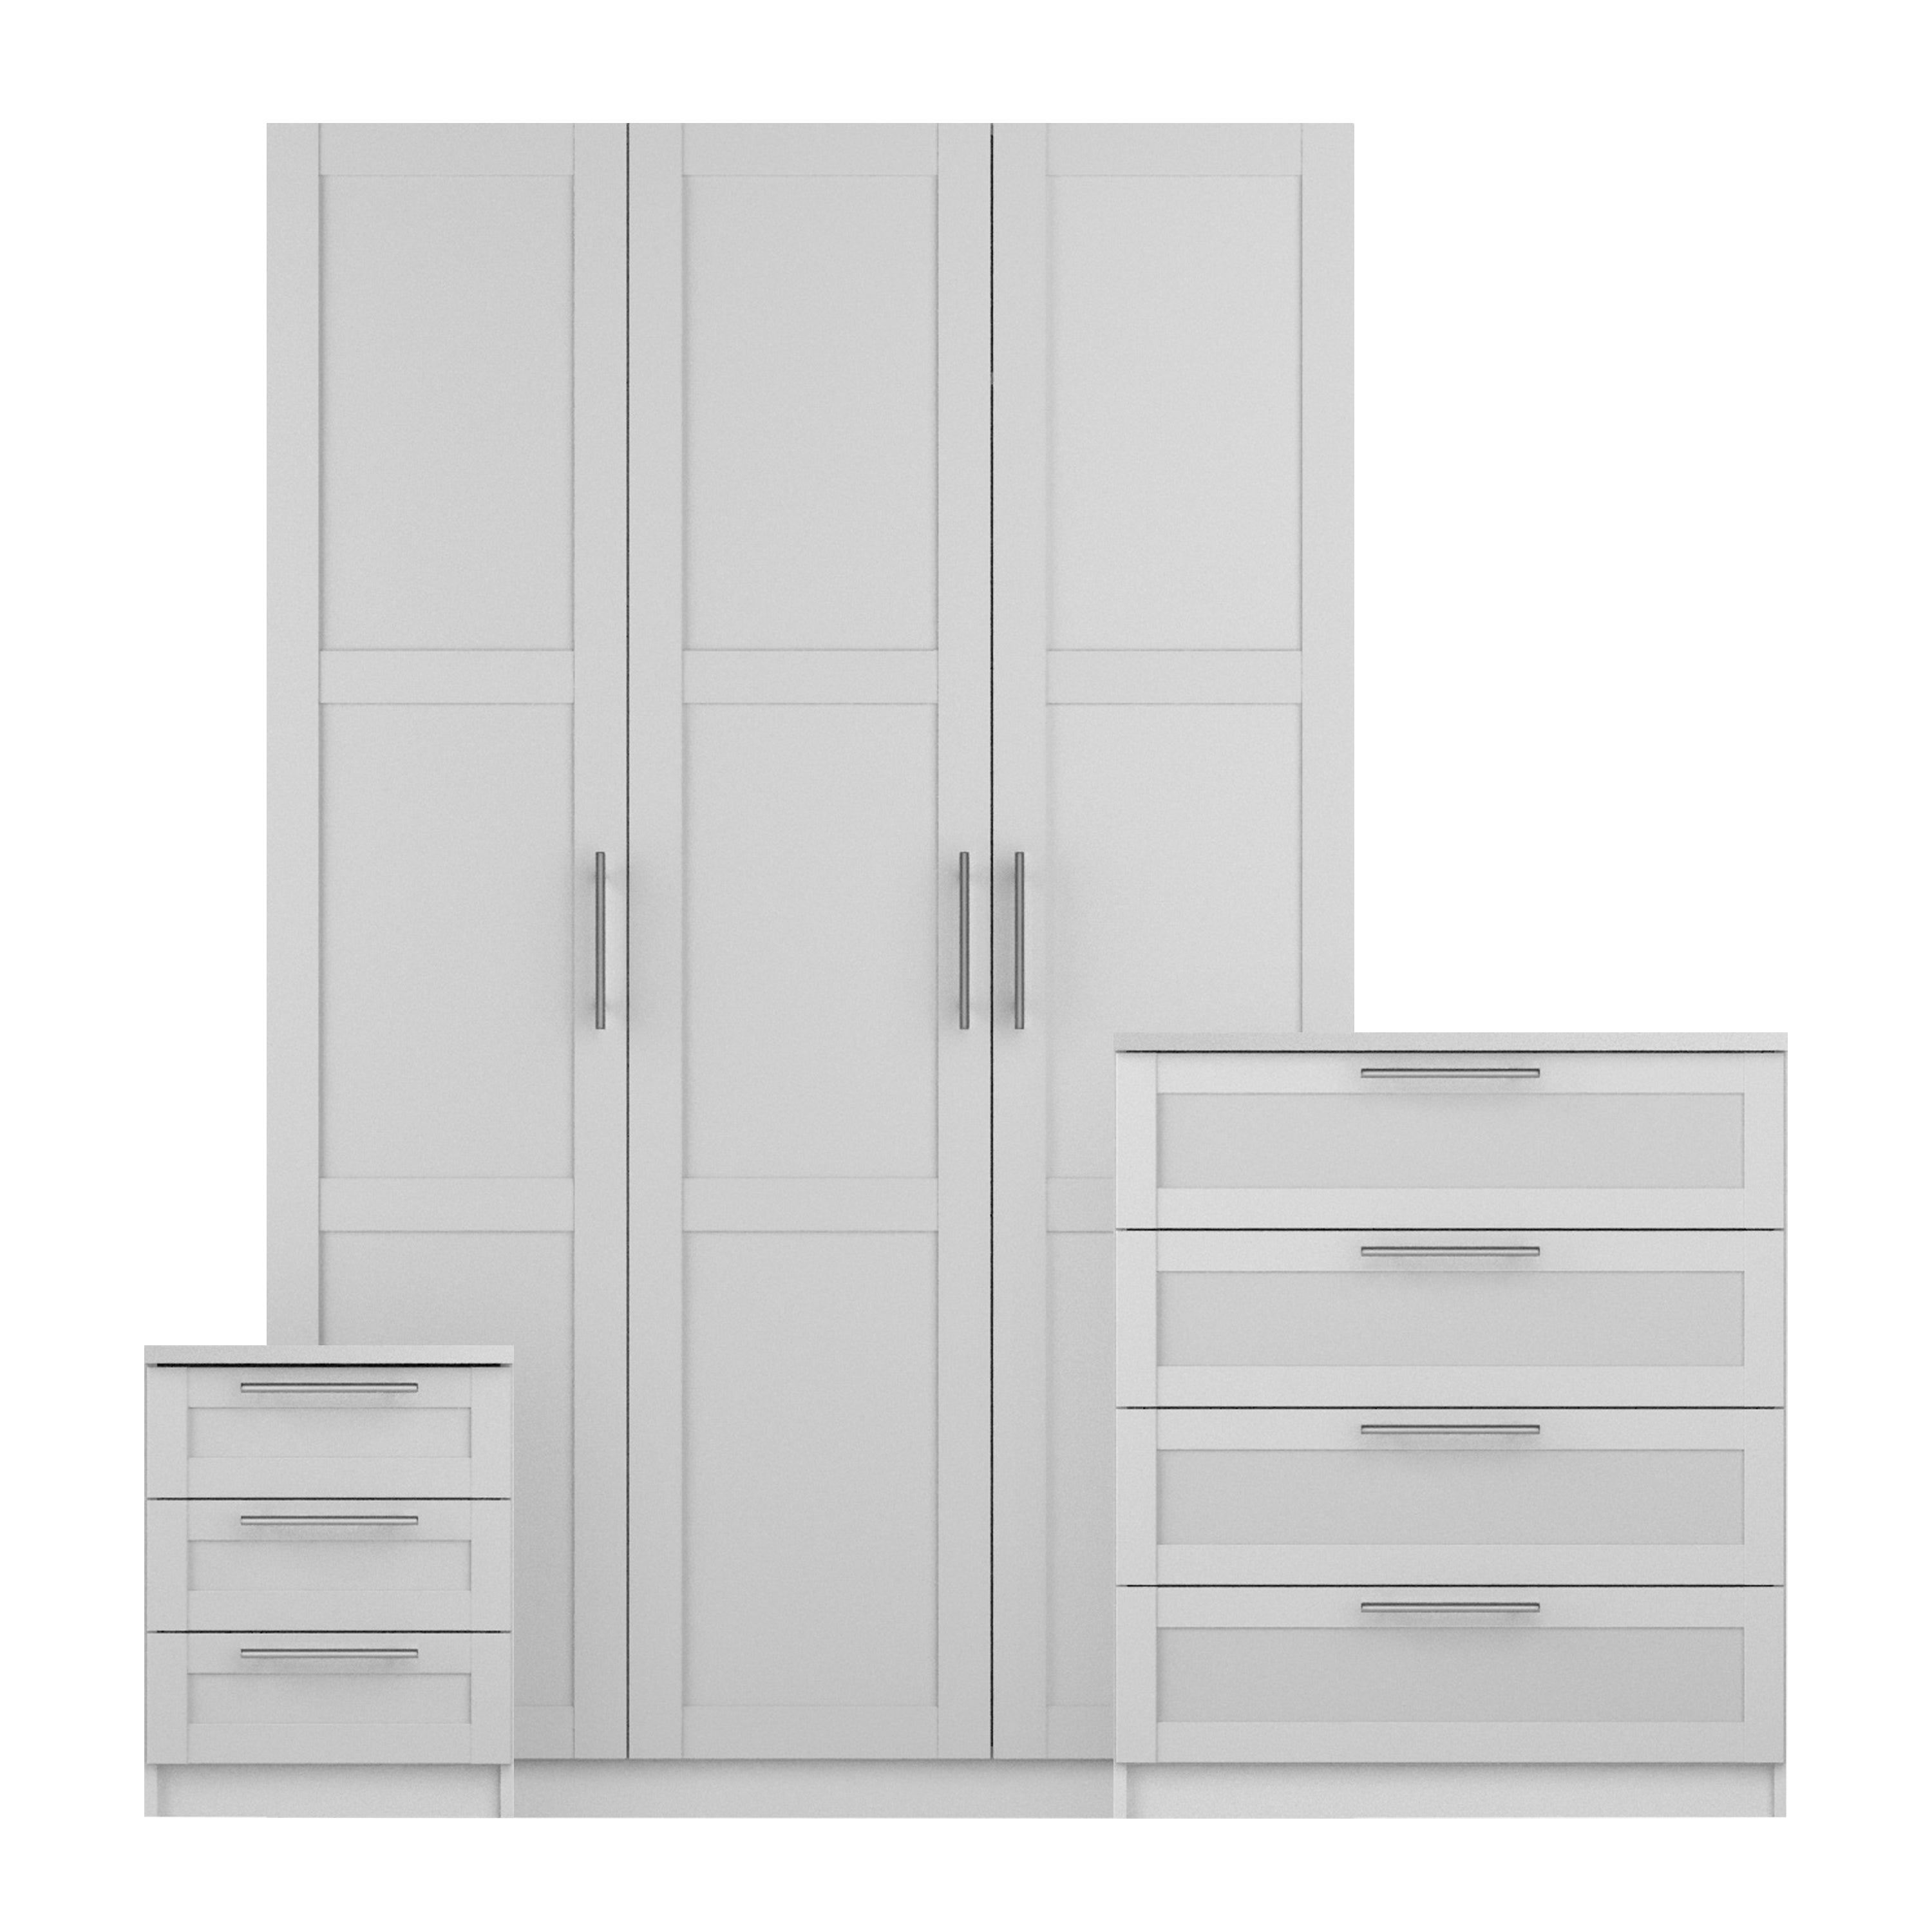 Sudbury Framed 3 Piece Triple Wardrobe Bedroom Furniture Set White